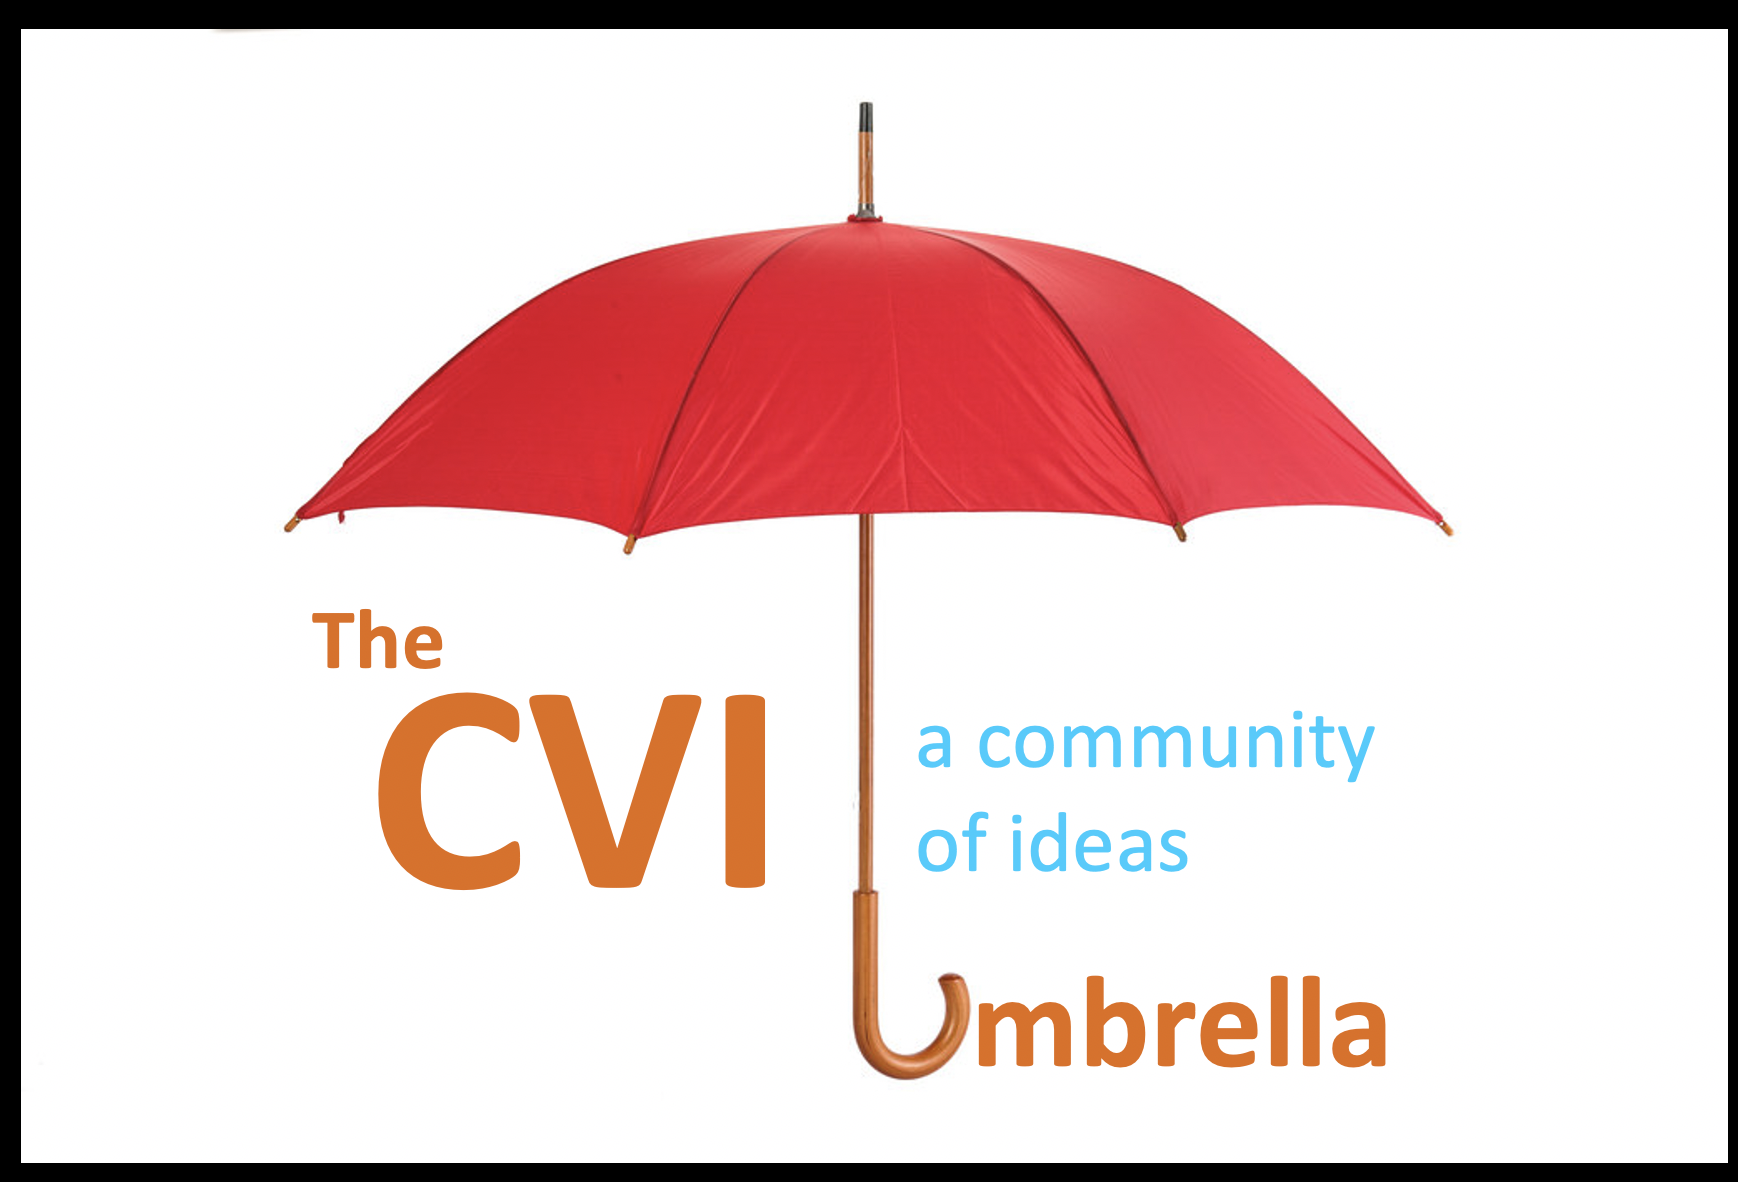 Red umbrella with the text "The CVI Umbrella:  A Community of Ideas"